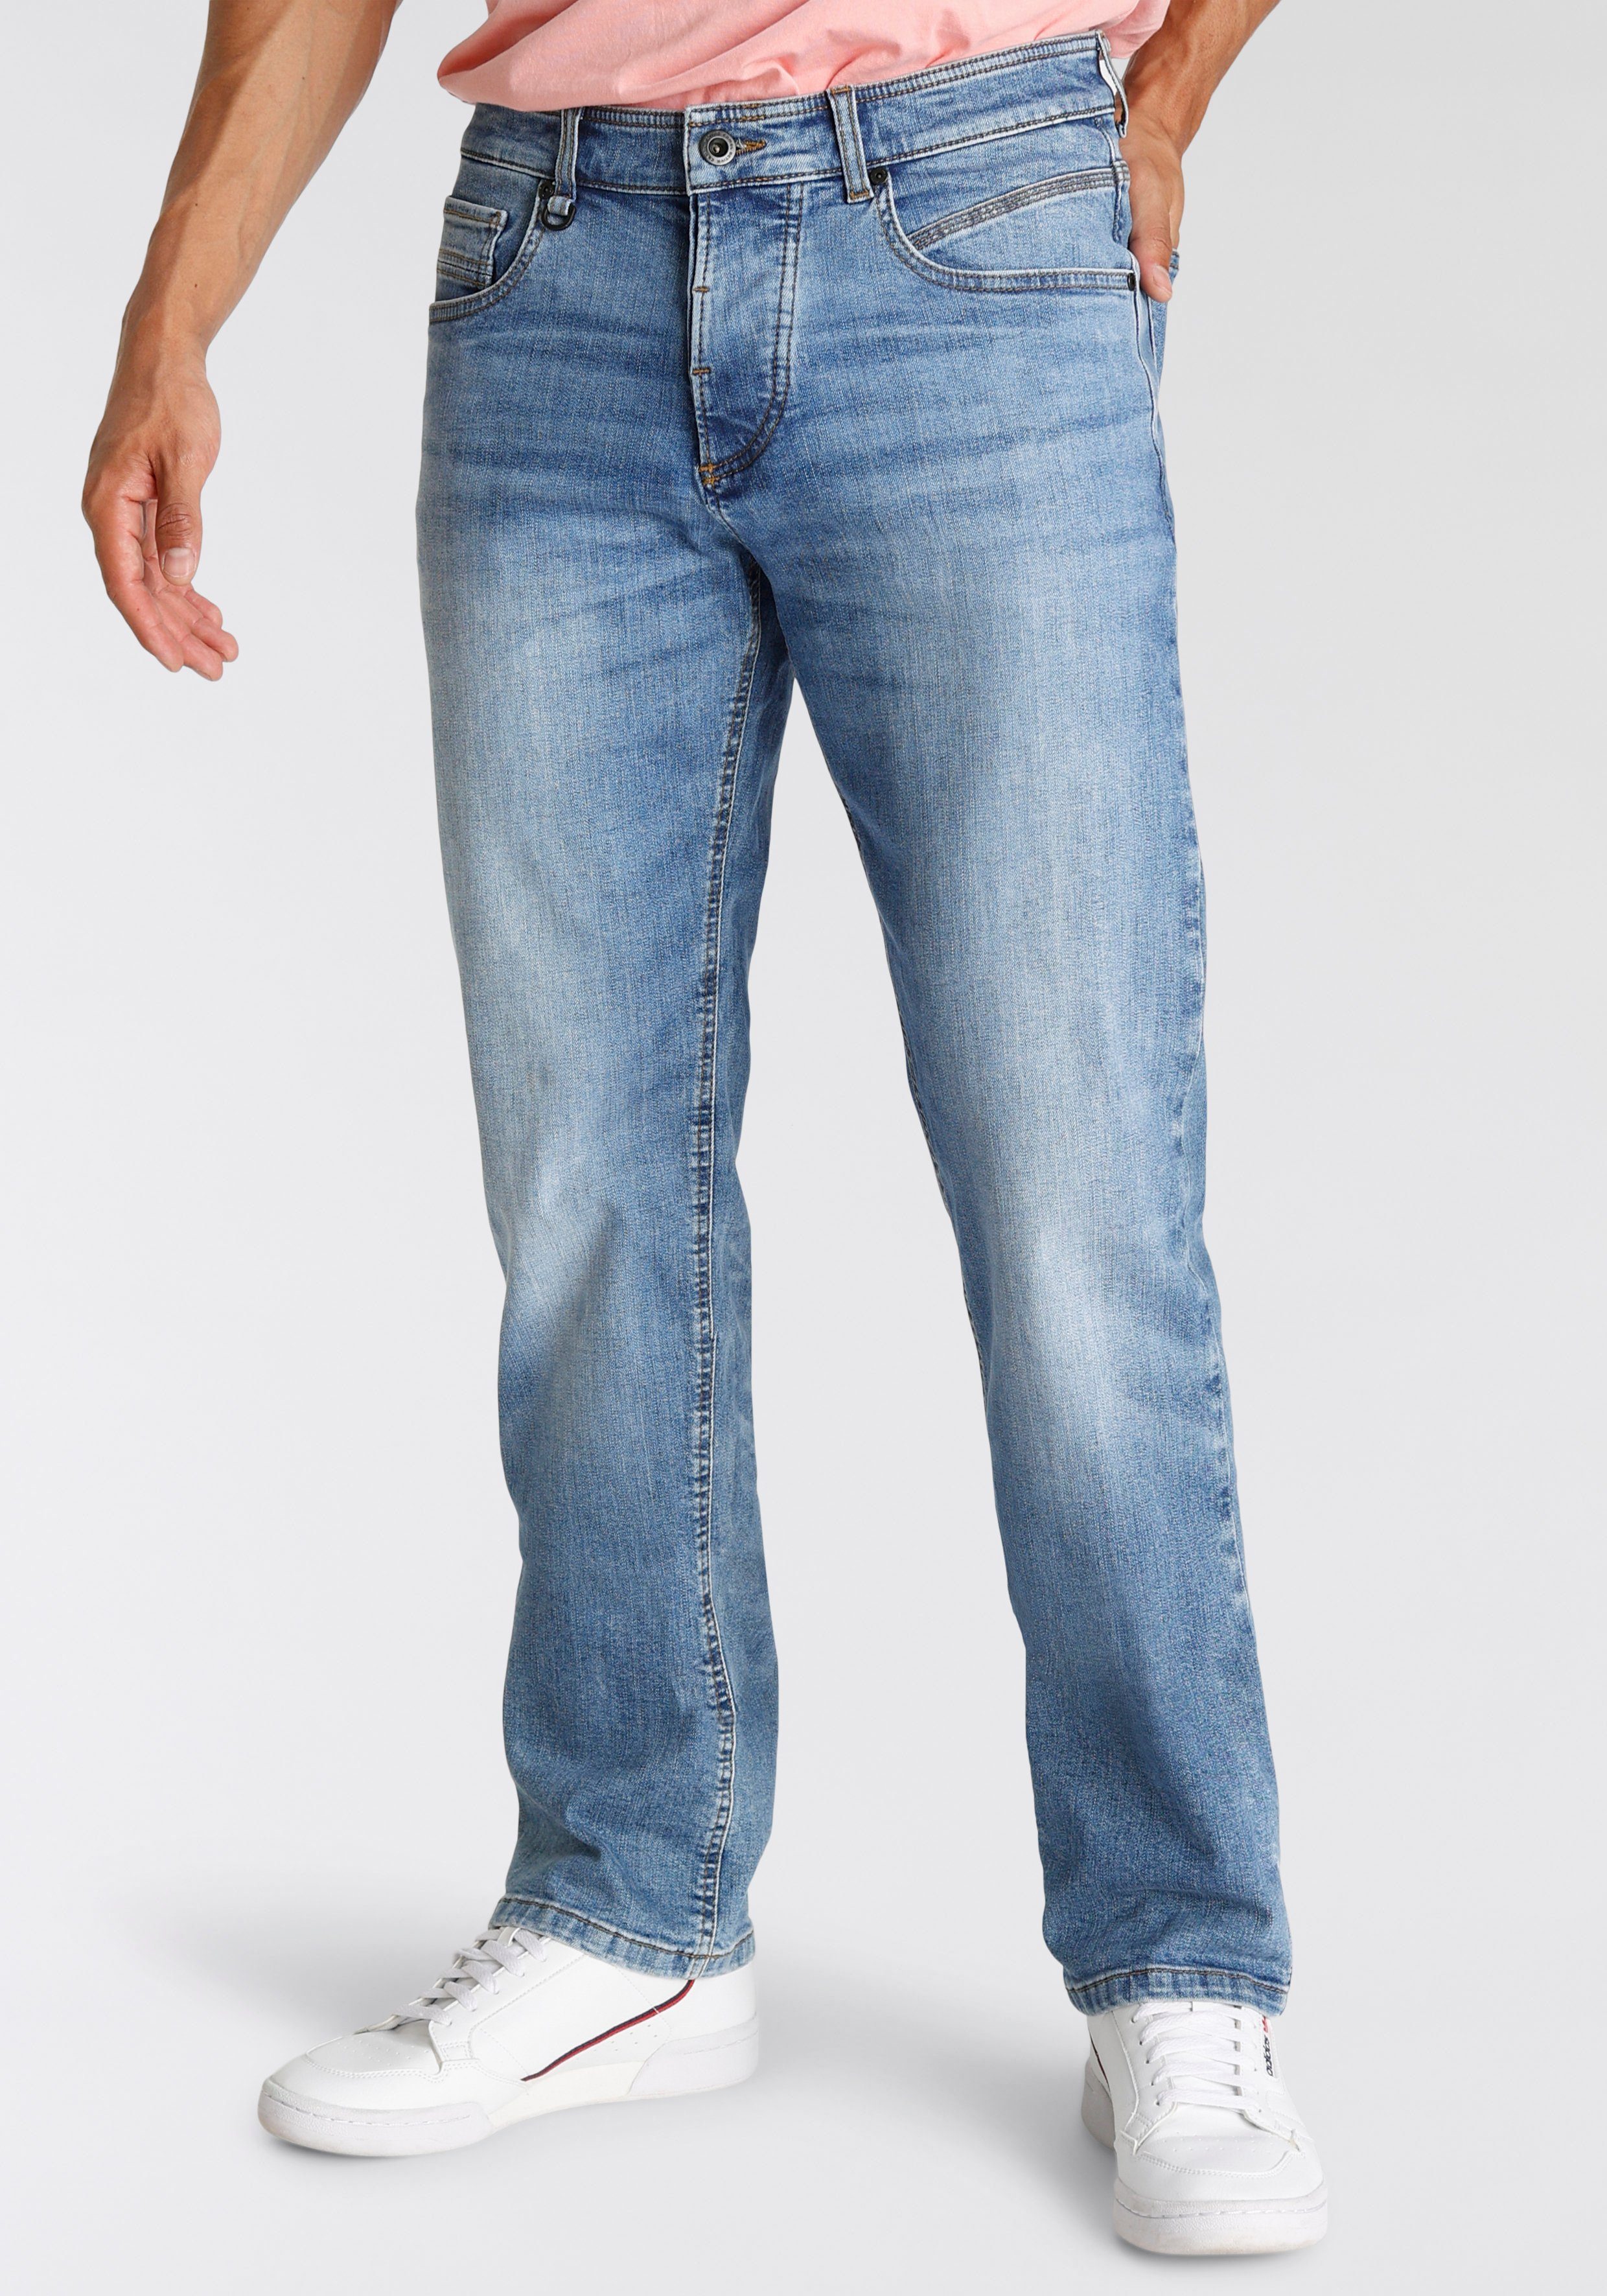 camel active 5-Pocket-Jeans »WOODSTOCK« kaufen | OTTO